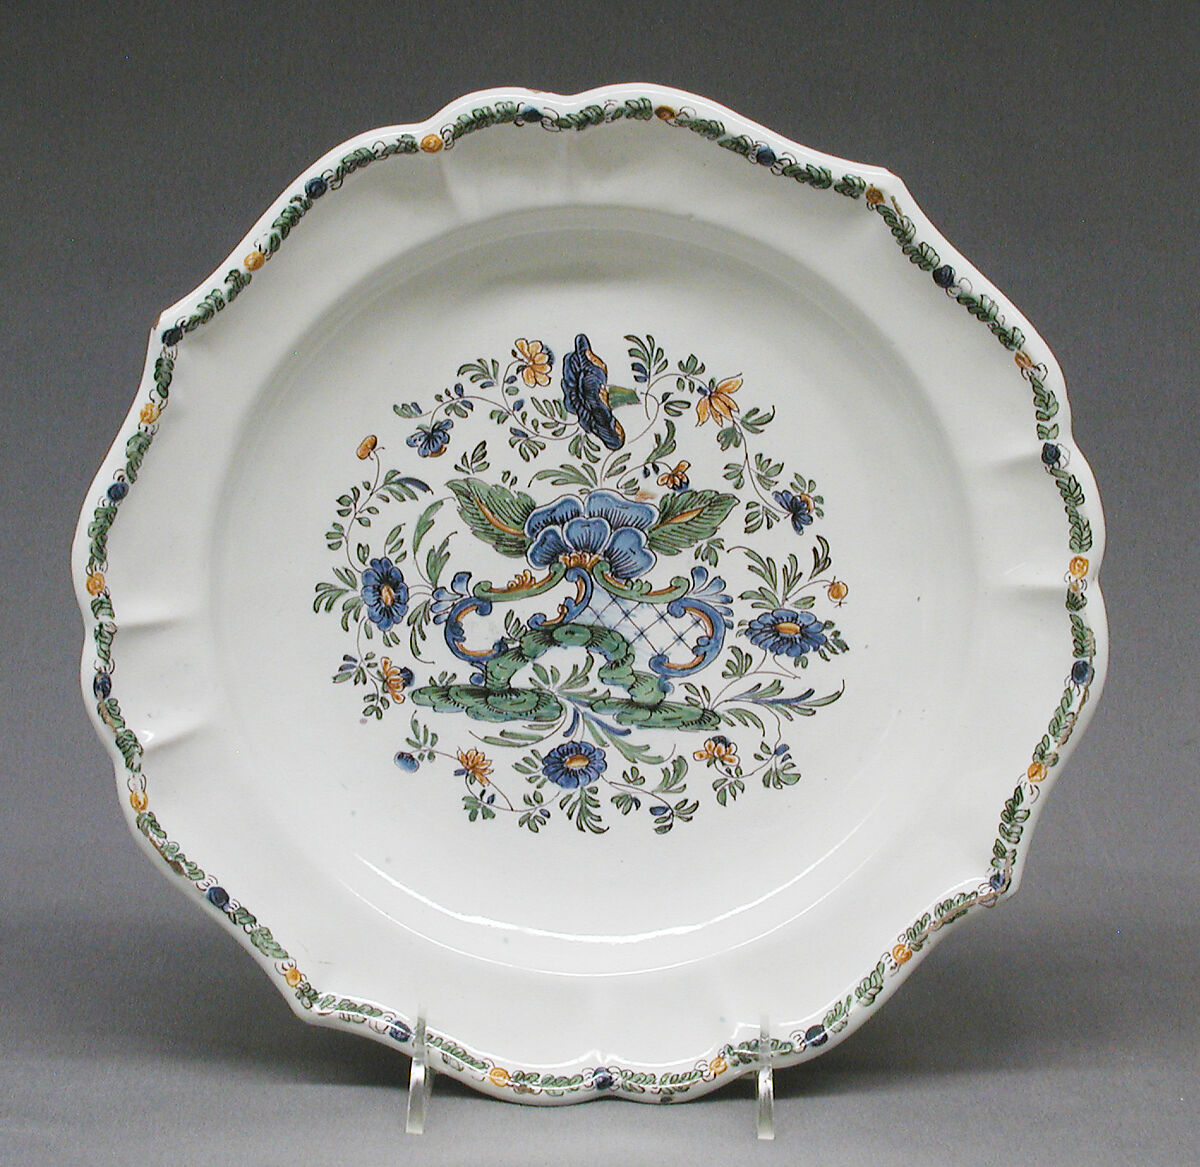 Plate, Possisbly Le Nove Porcelain Manufactory, Maiolica (tin-glazed earthenware), Italian, probably Nove 